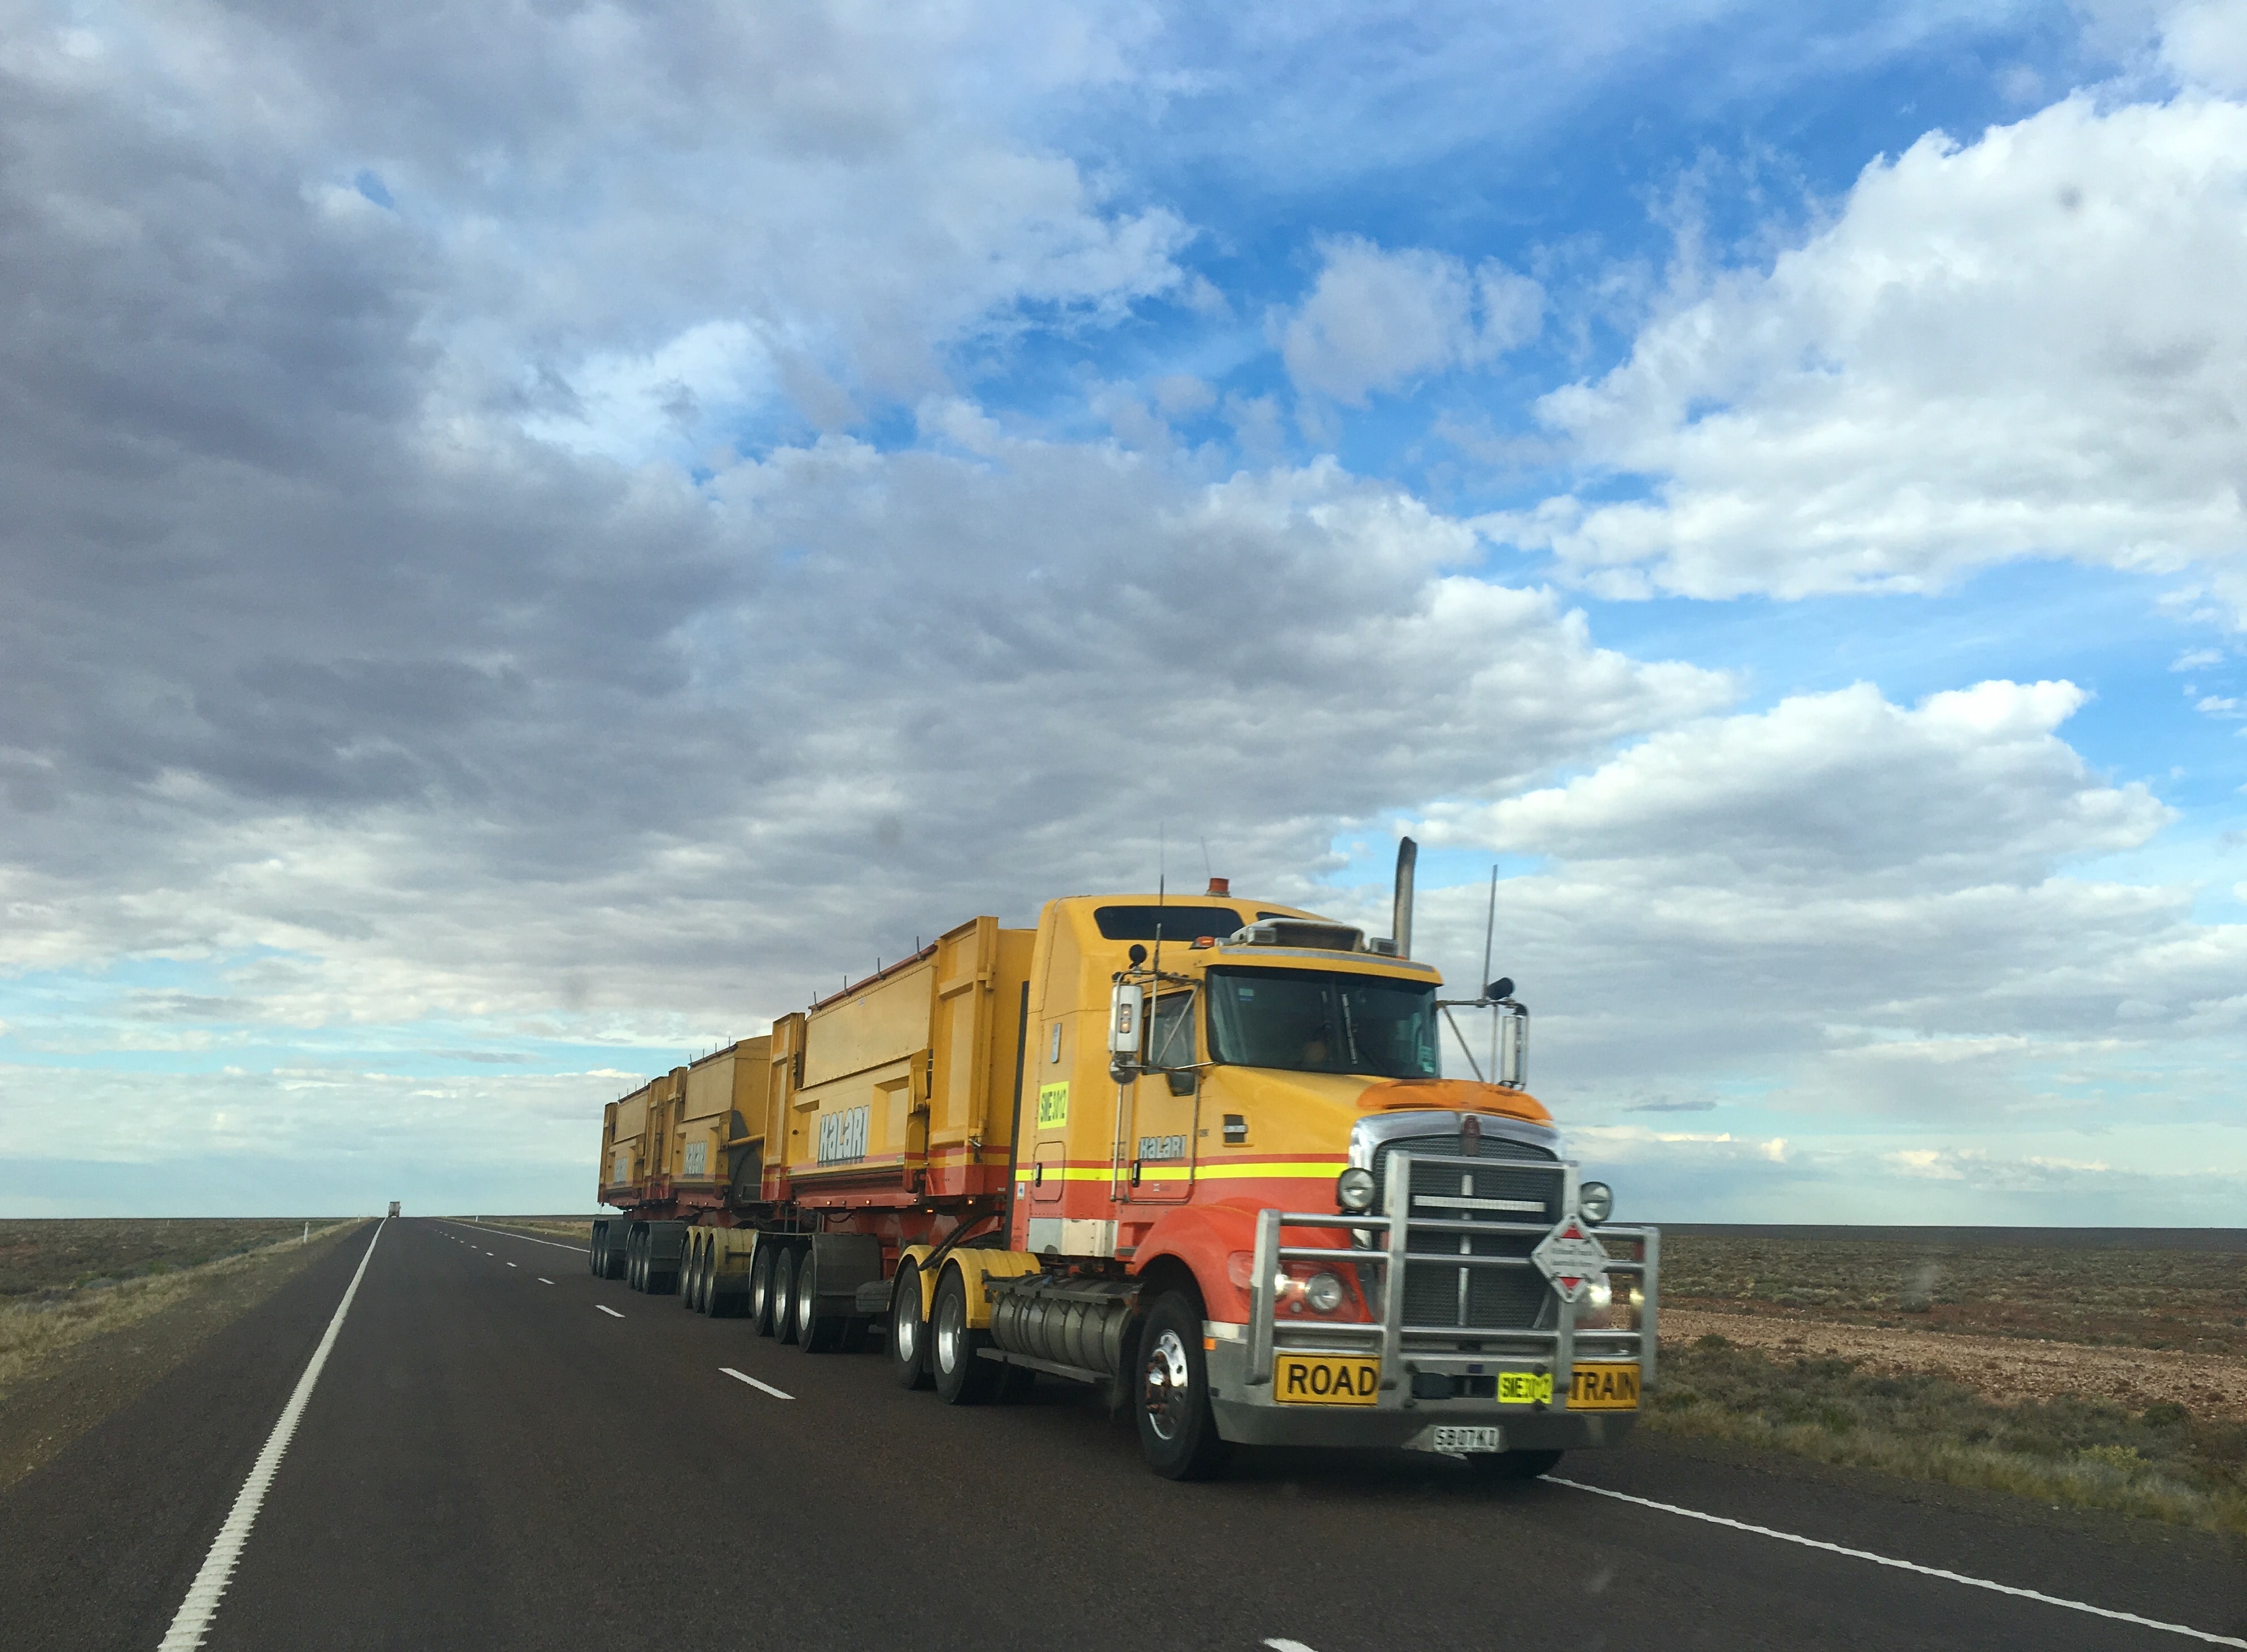 truck and equipment financing, truck loan, truck trailer and equipment financing